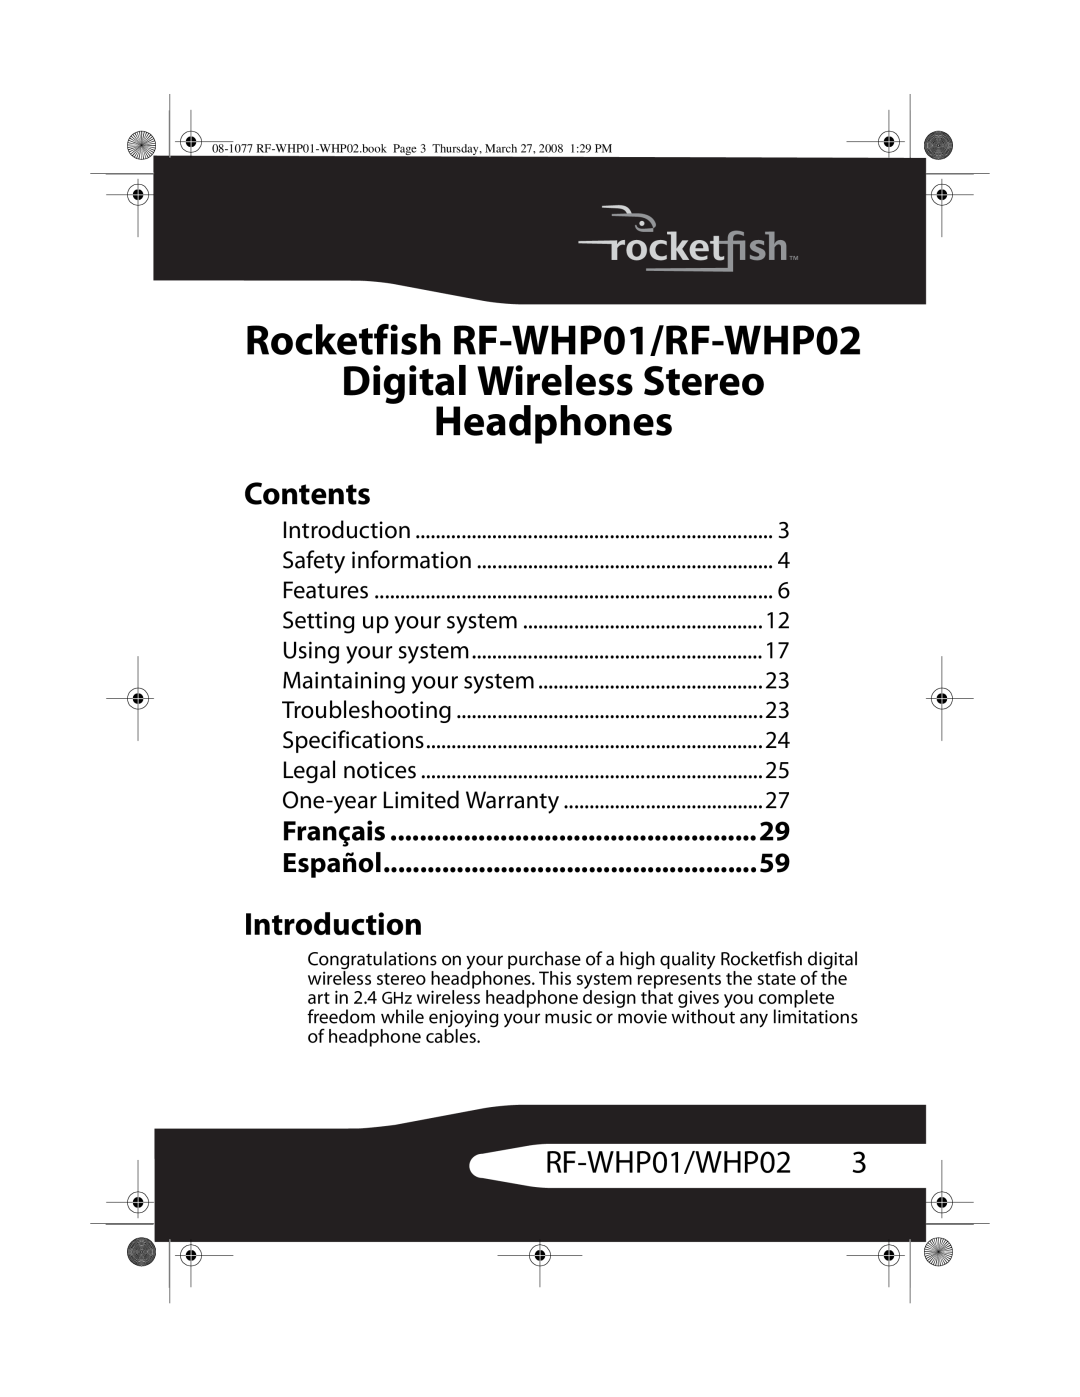 RocketFish Rocketfish RF-WHP01/RF-WHP02, Digital Wireless Stereo Headphones, Contents, Introduction, RF-WHP01/WHP023 